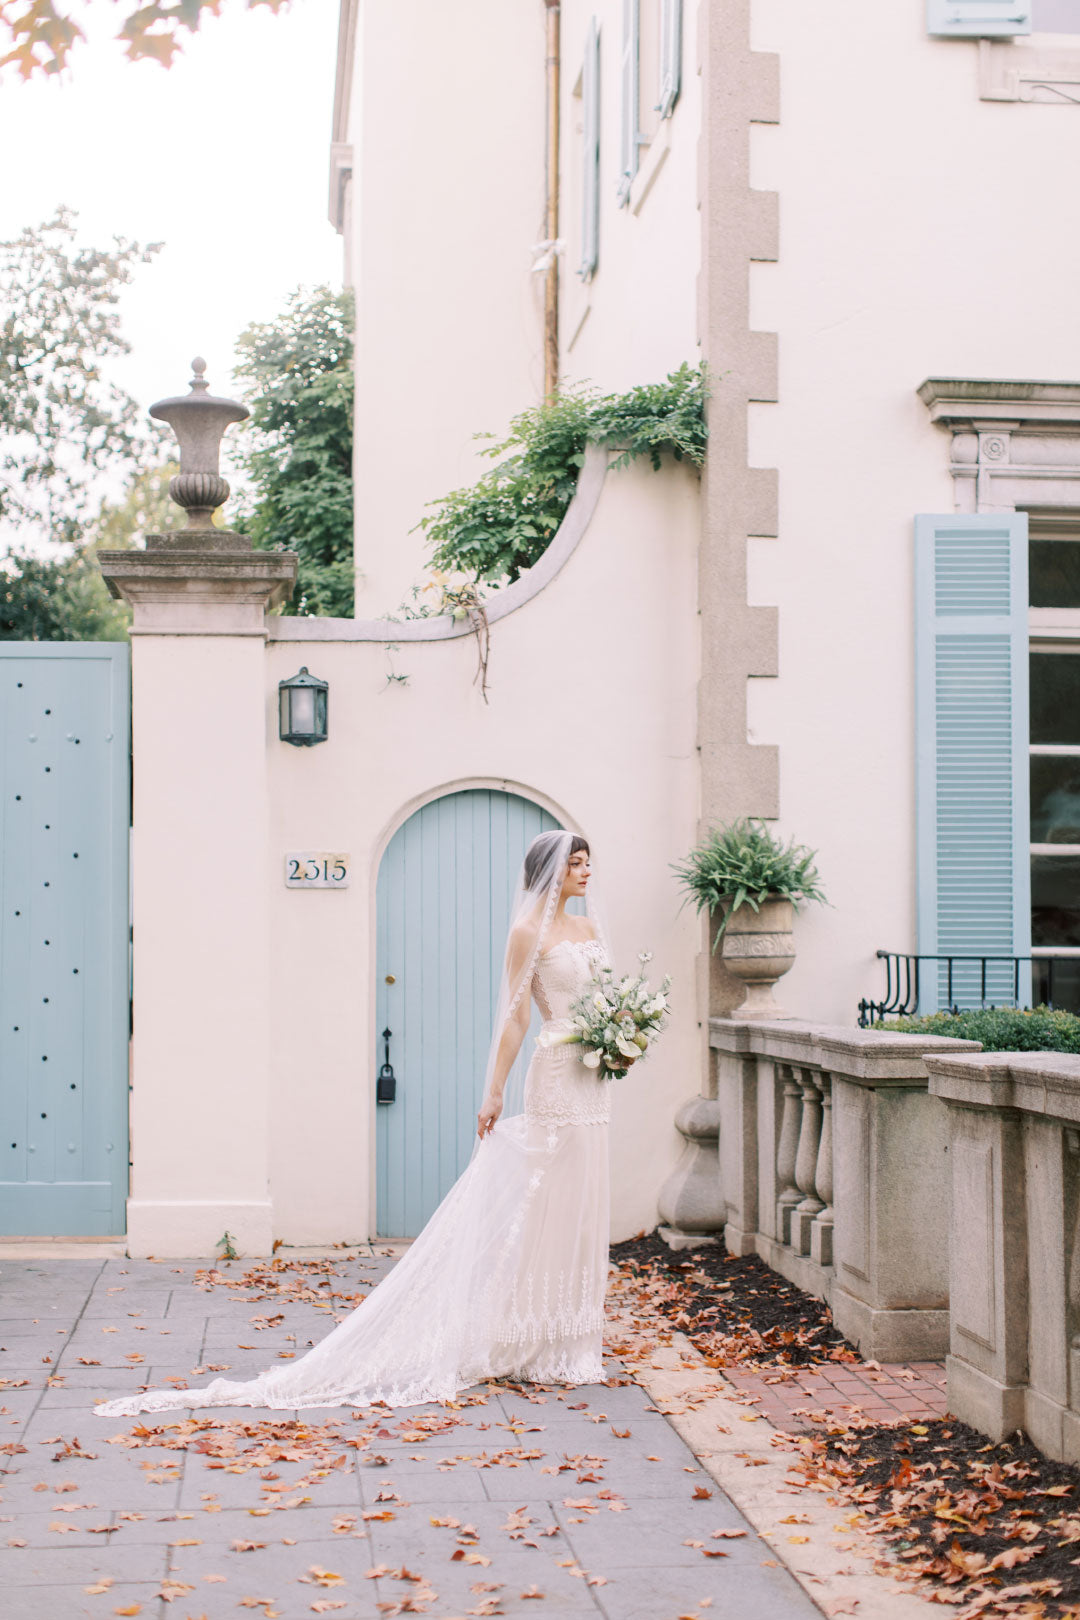 Bride in wedding dress in courtyards setting